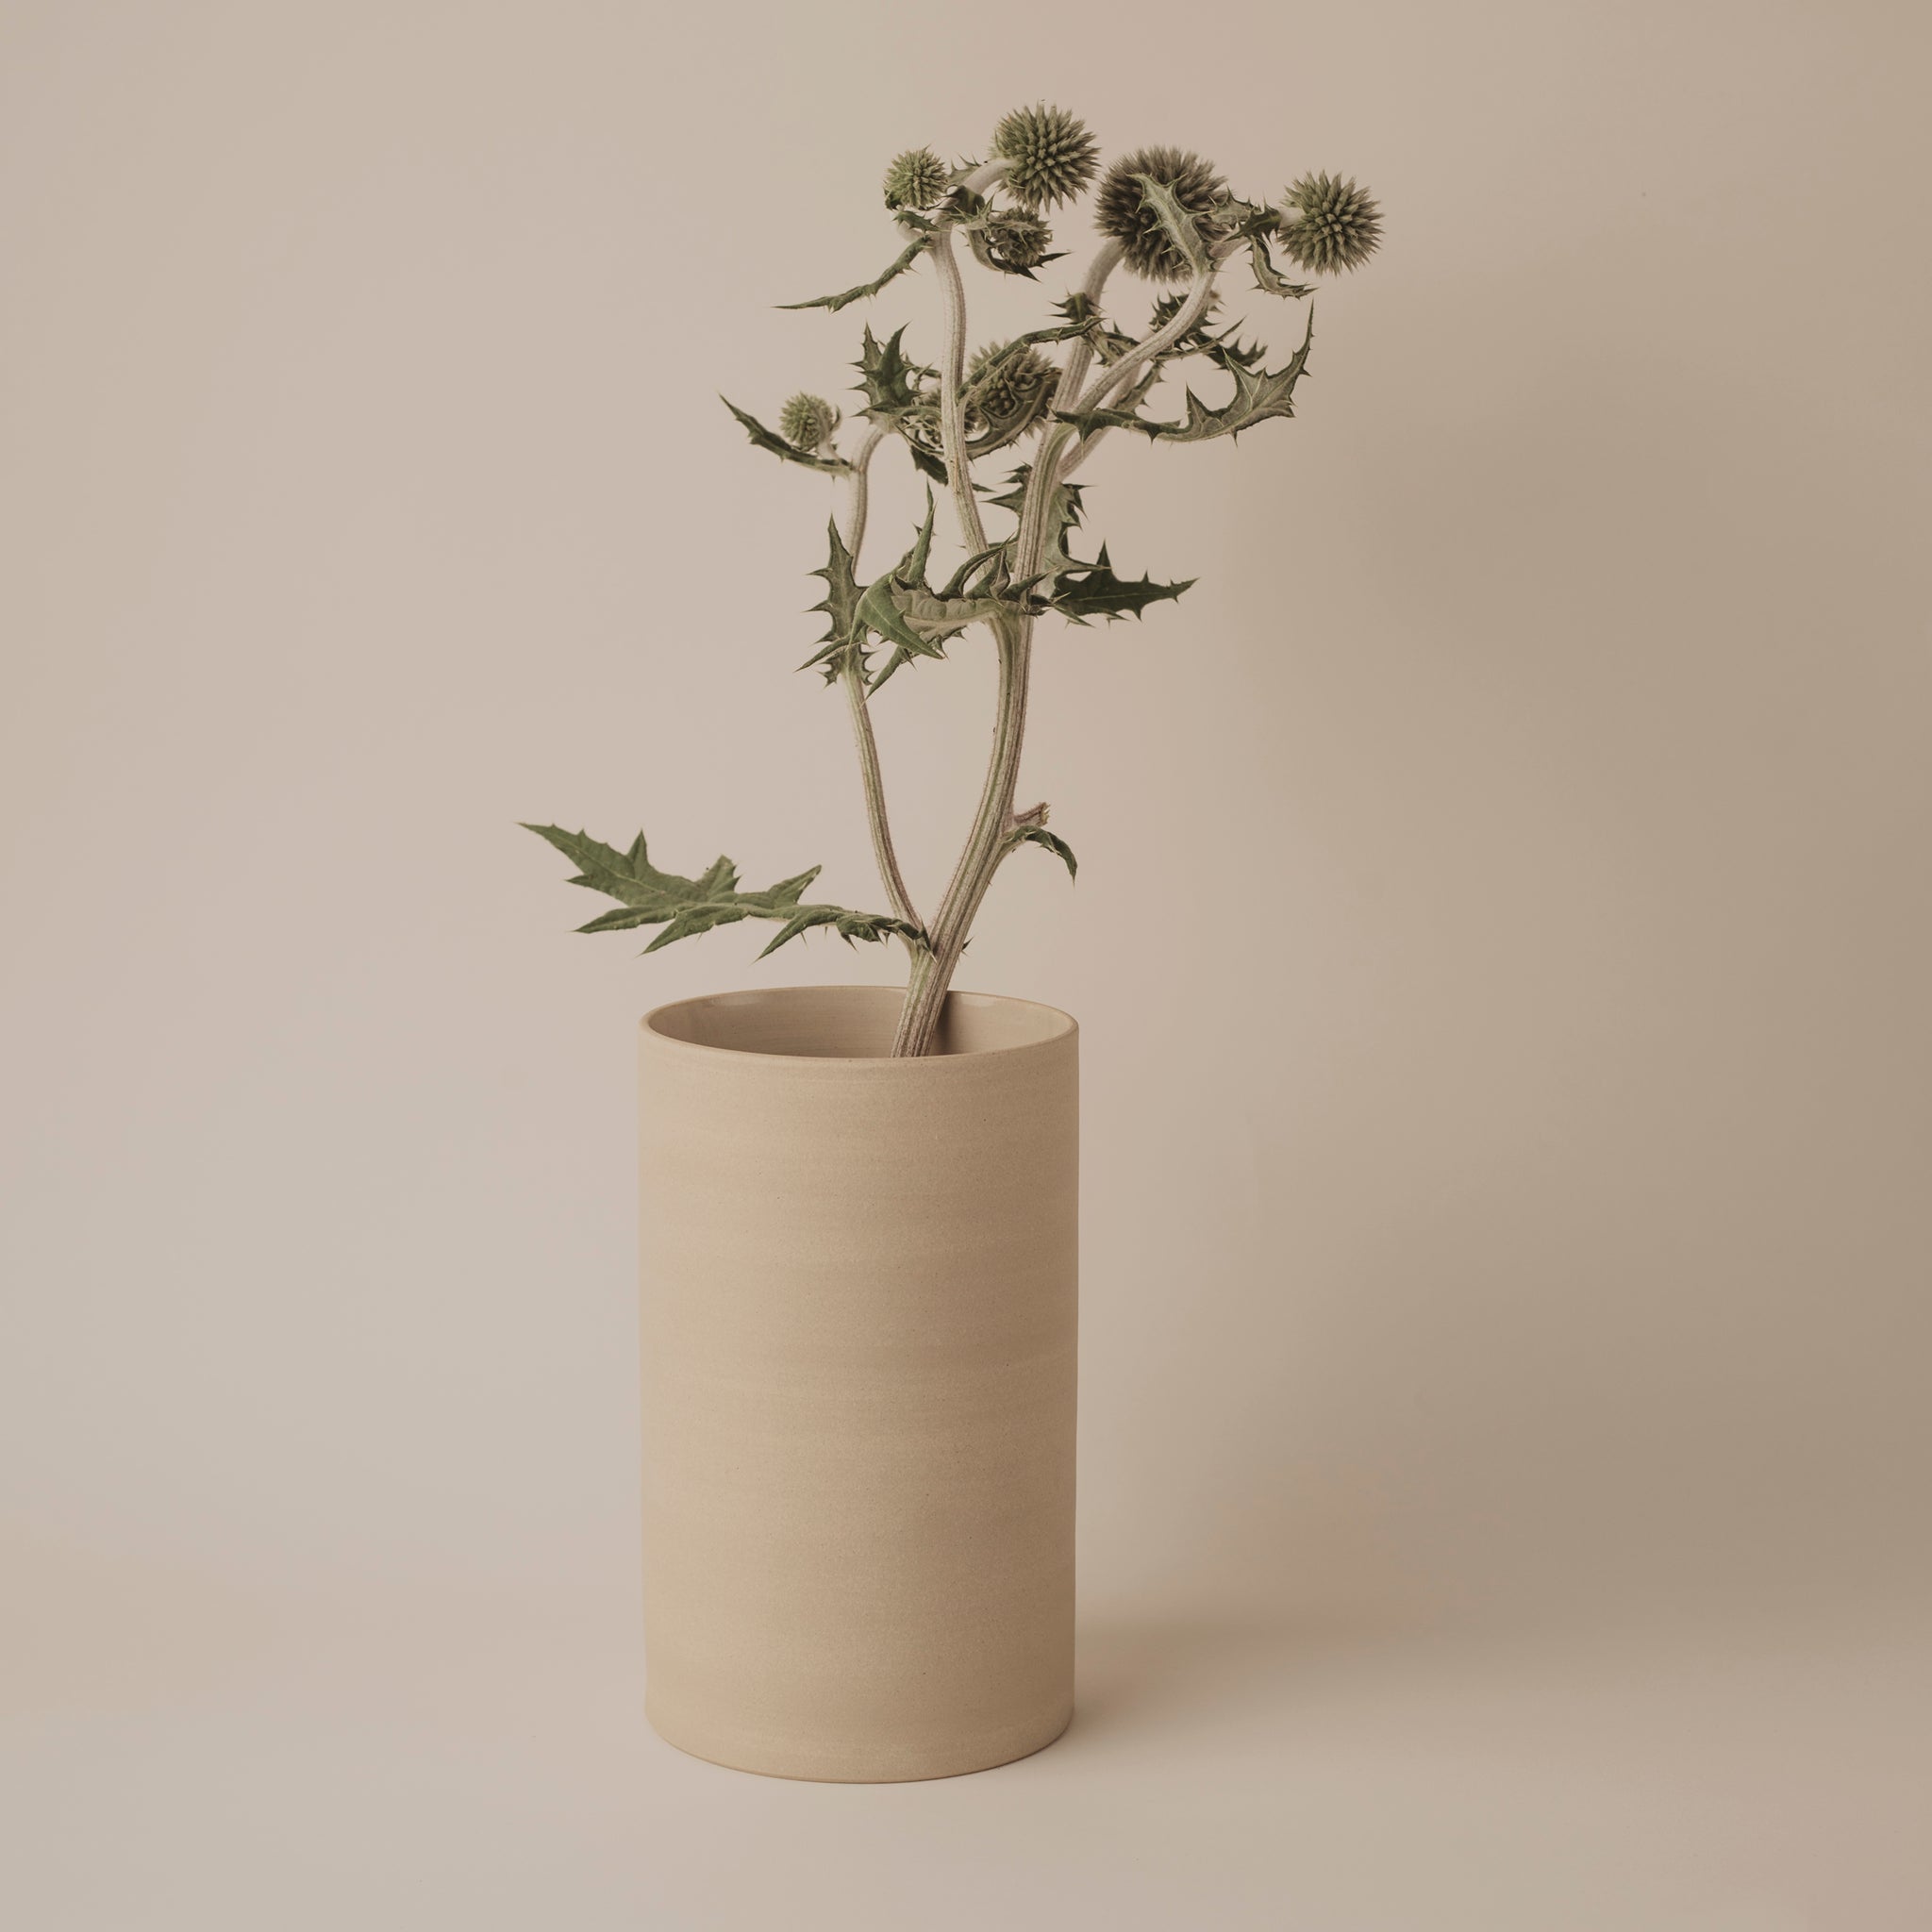 Flower Vase handmade clai studio ceramic atelier Berlin Prenzlauer Berg